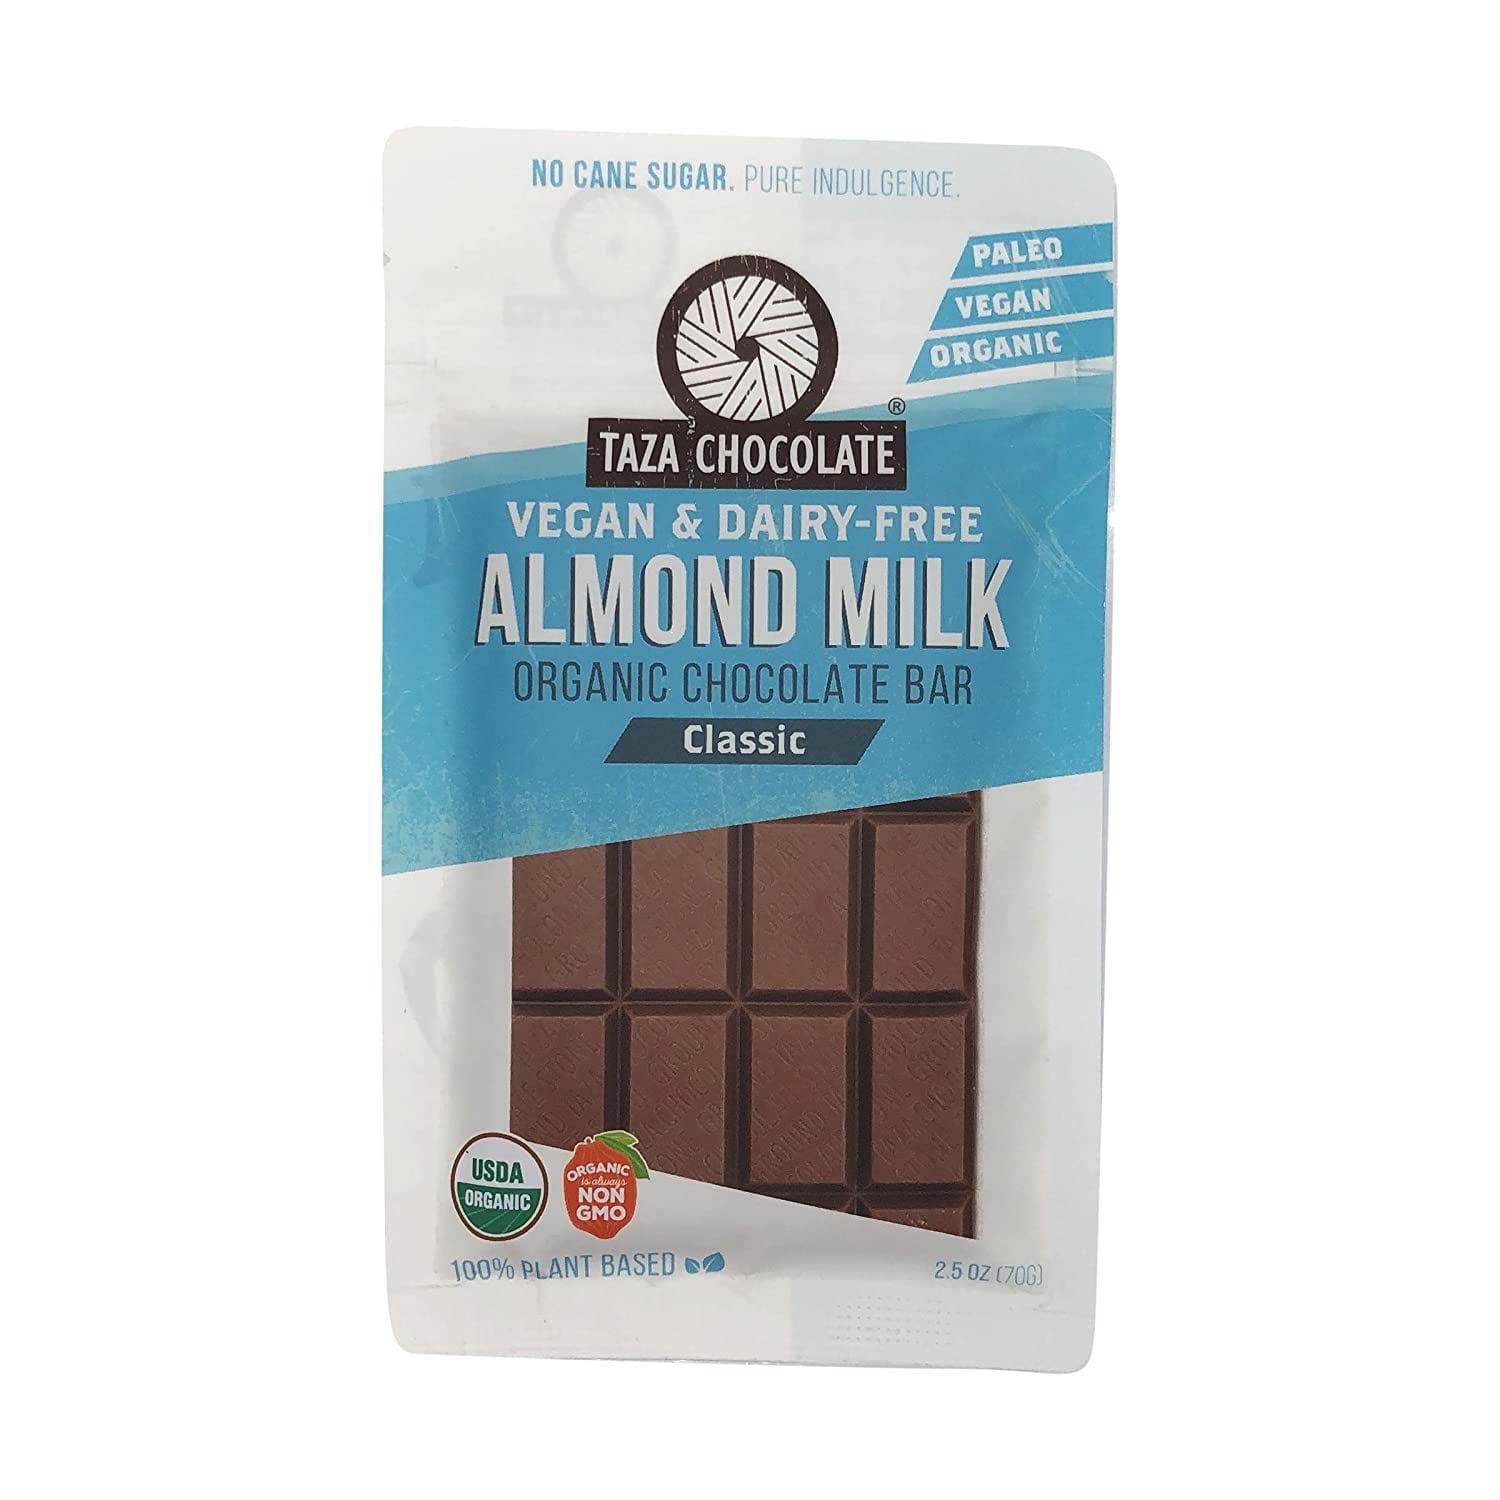 Taza Chocolate Bar Almond Milk Classic Organic 2.5 oz